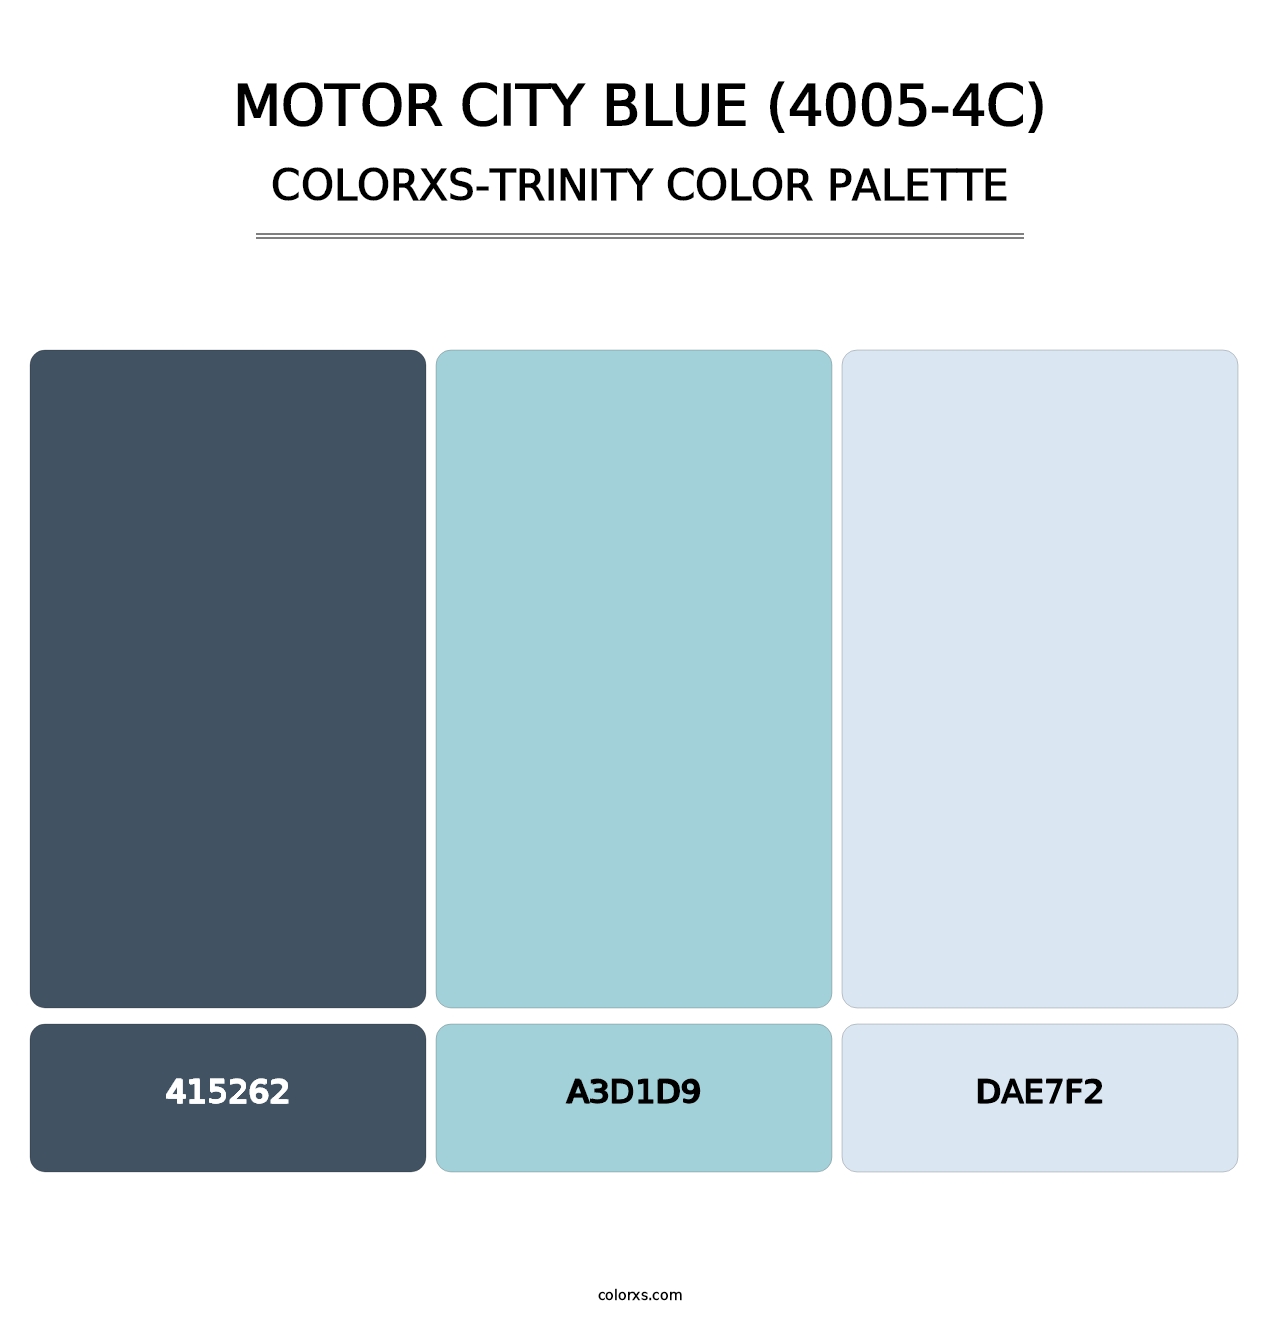 Motor City Blue (4005-4C) - Colorxs Trinity Palette